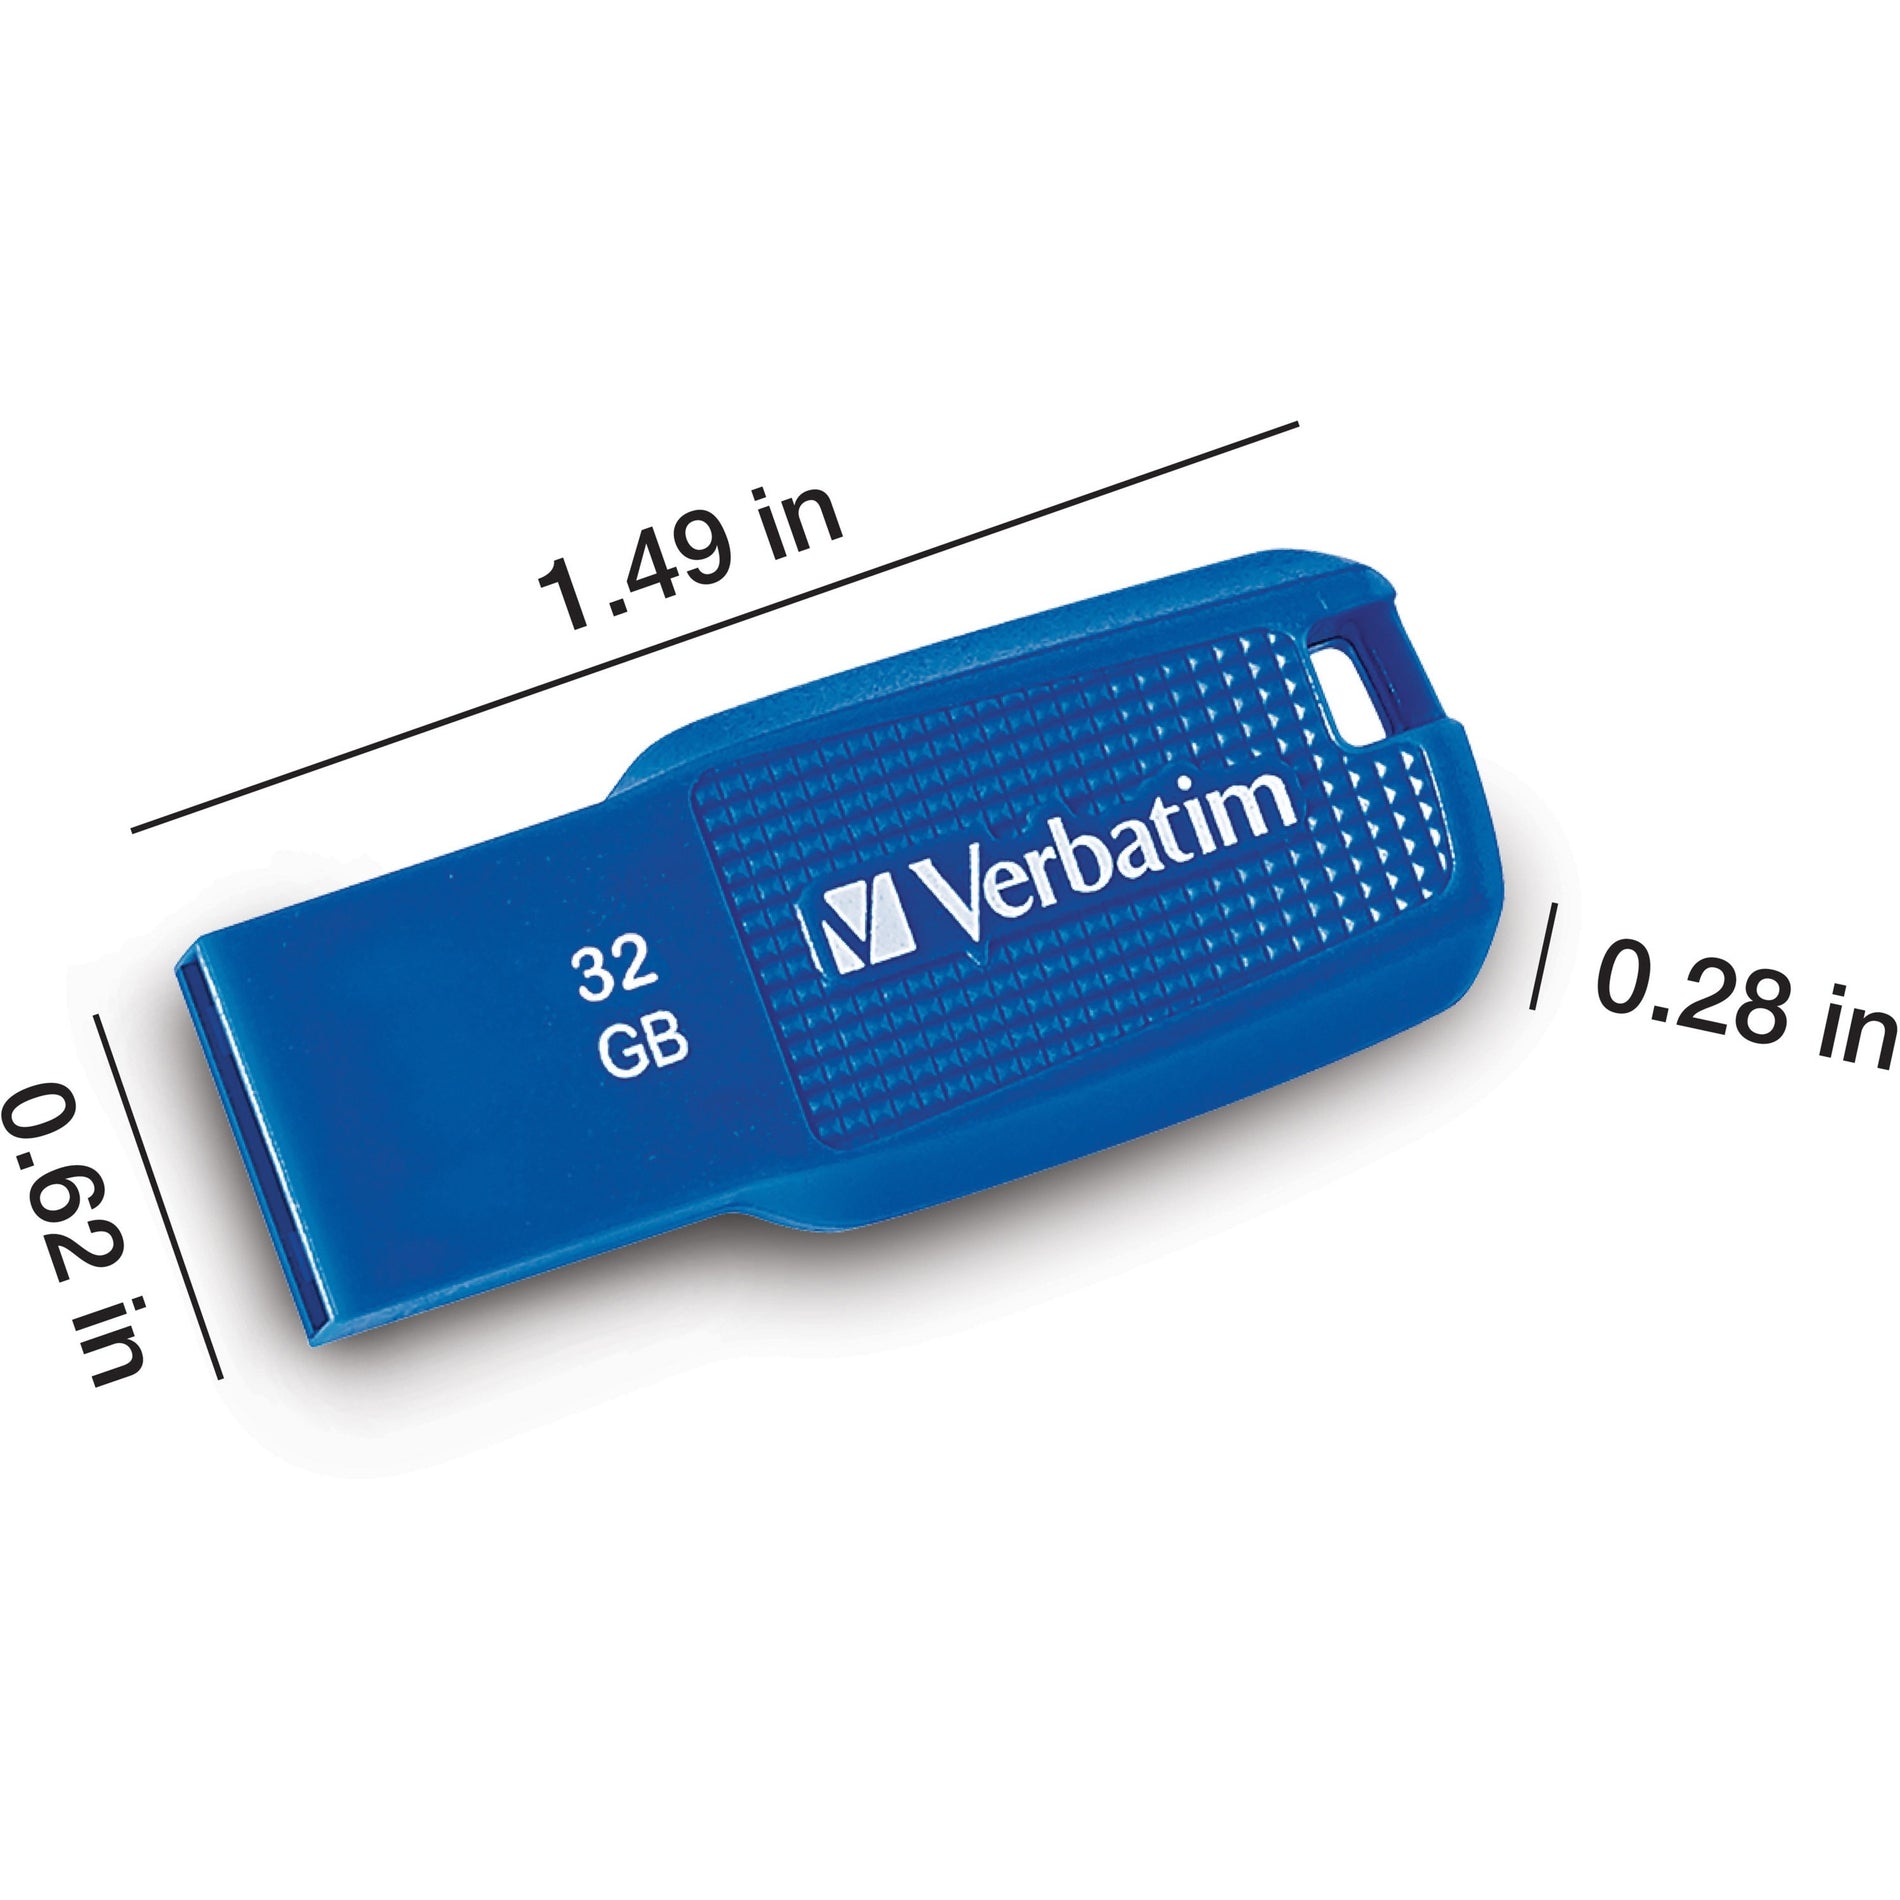 Verbatim 70878 32GB Ergo USB 3.0 Flash Drive - Blue, Password Protection, Ergonomic, Capless, Lanyard